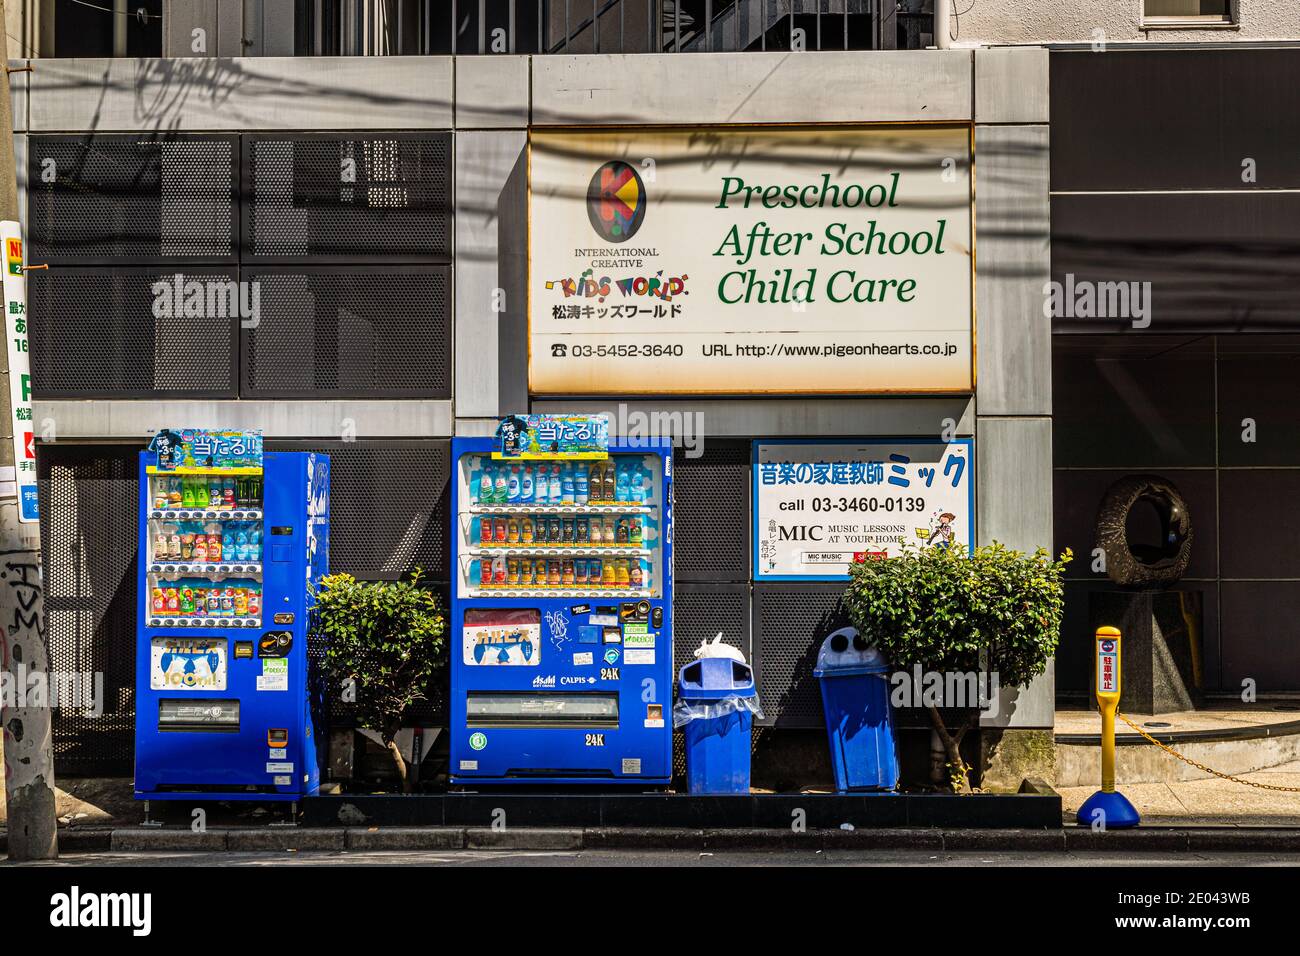 Preschool or After School Child Care in Tokyo, Shibuya, Japan Stock Photo